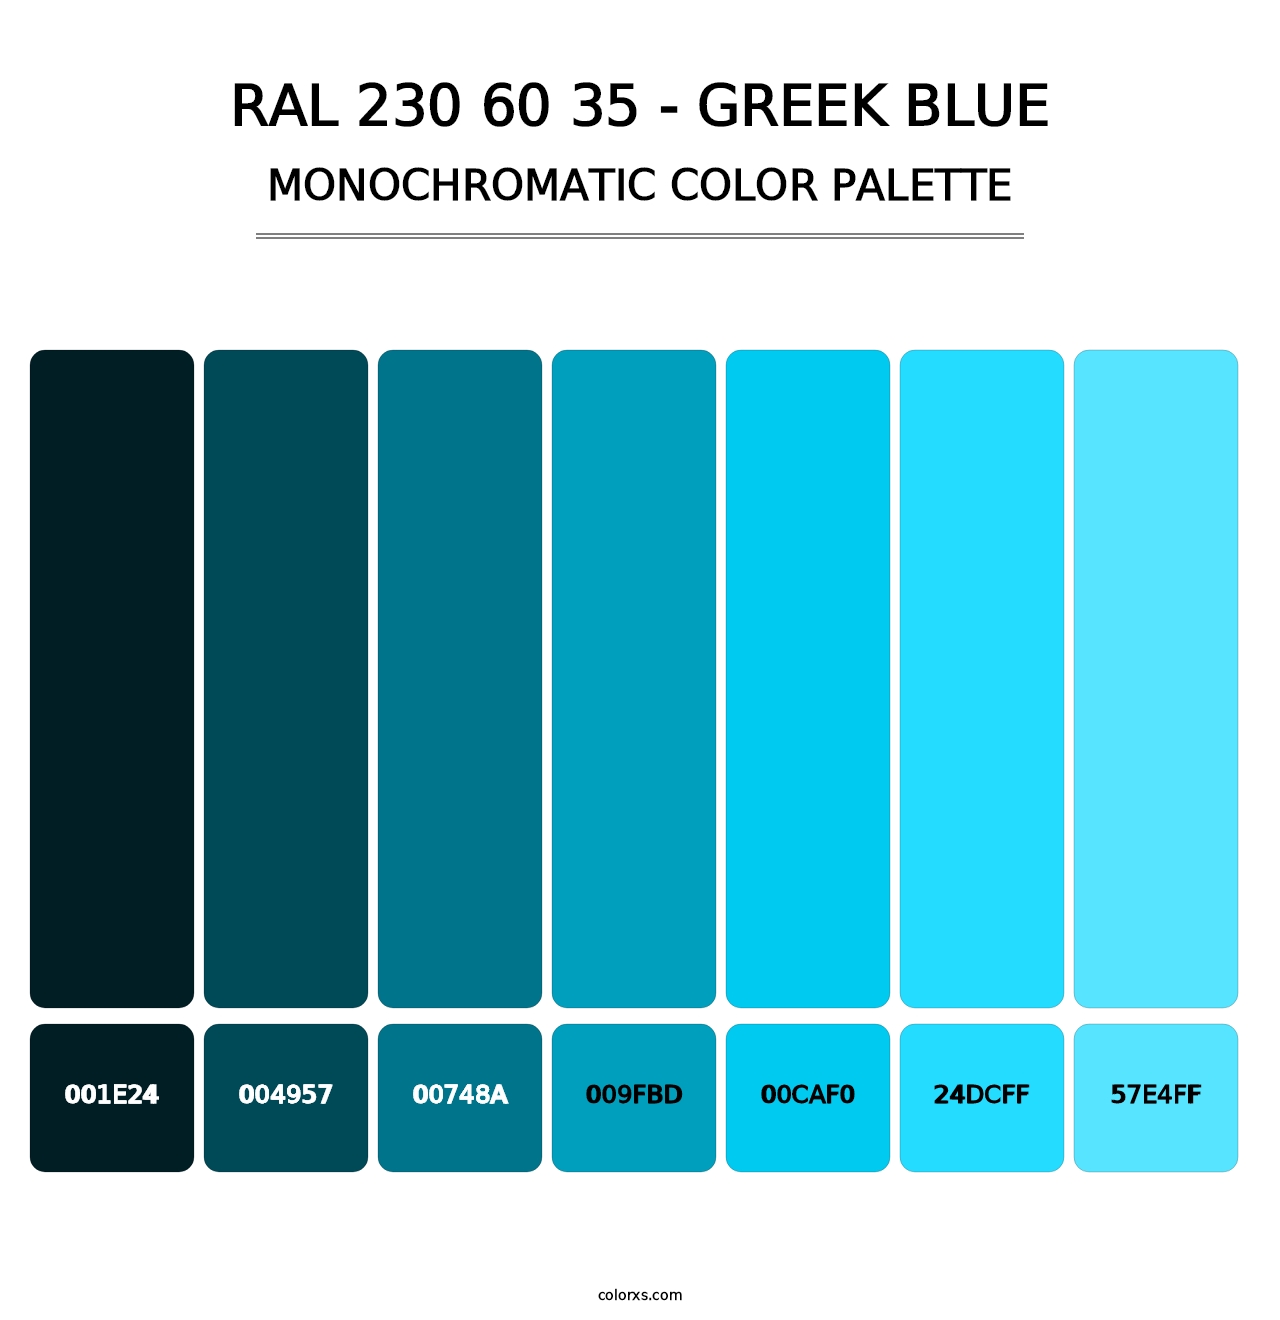 RAL 230 60 35 - Greek Blue - Monochromatic Color Palette